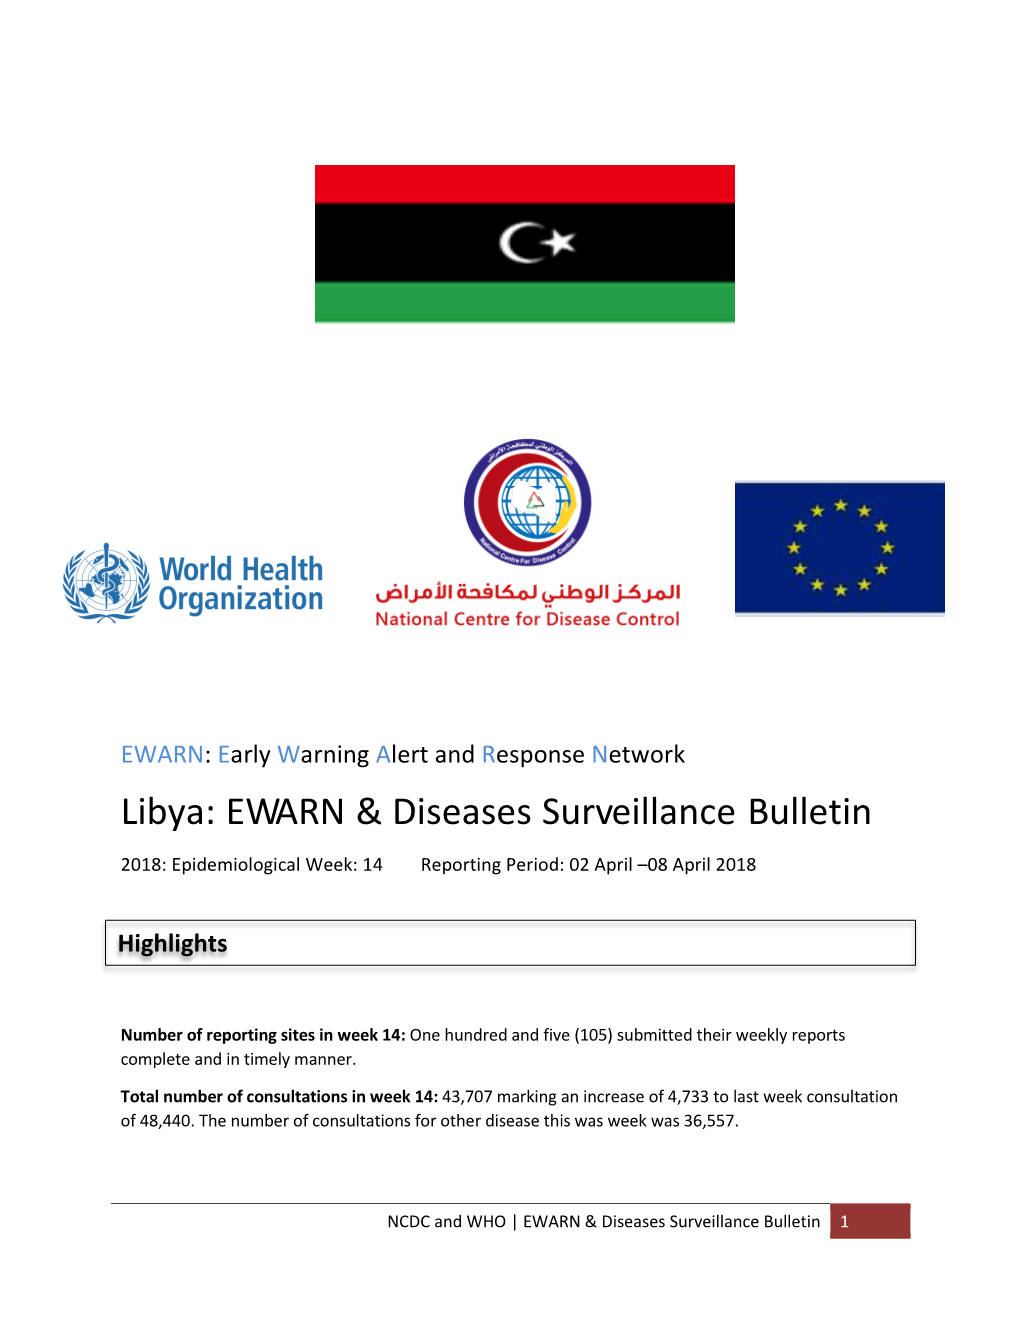 EWARN & Diseases Surveillance Bulletin